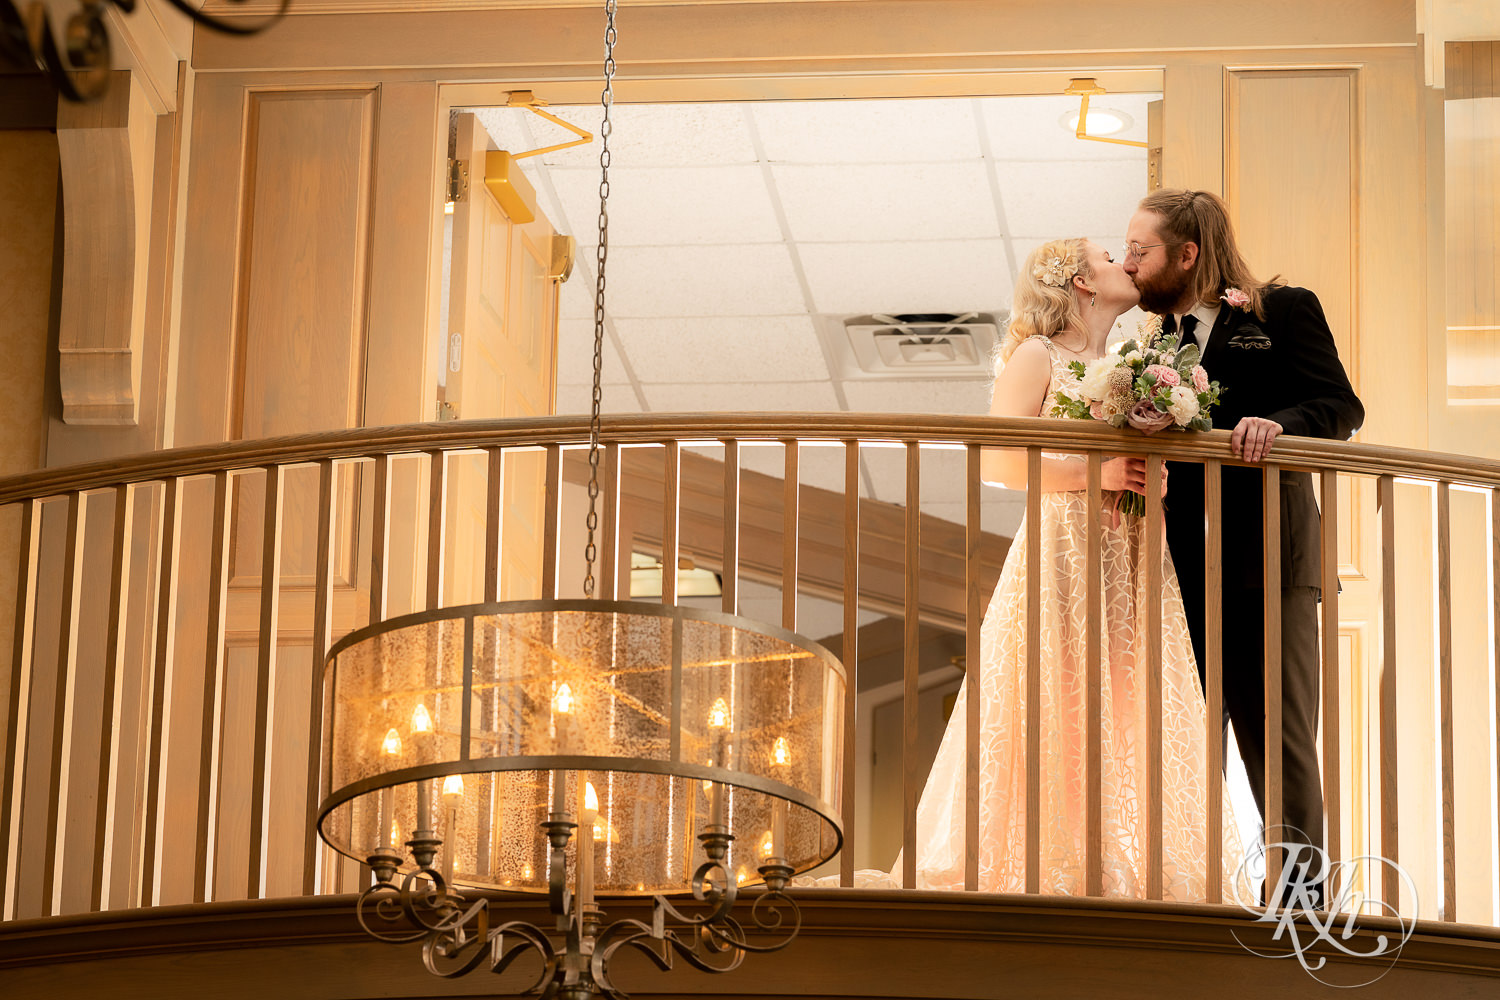 Bride and groom kiss on balcony at Rush Creek Golf Club in Maple Grove, Minnesota.